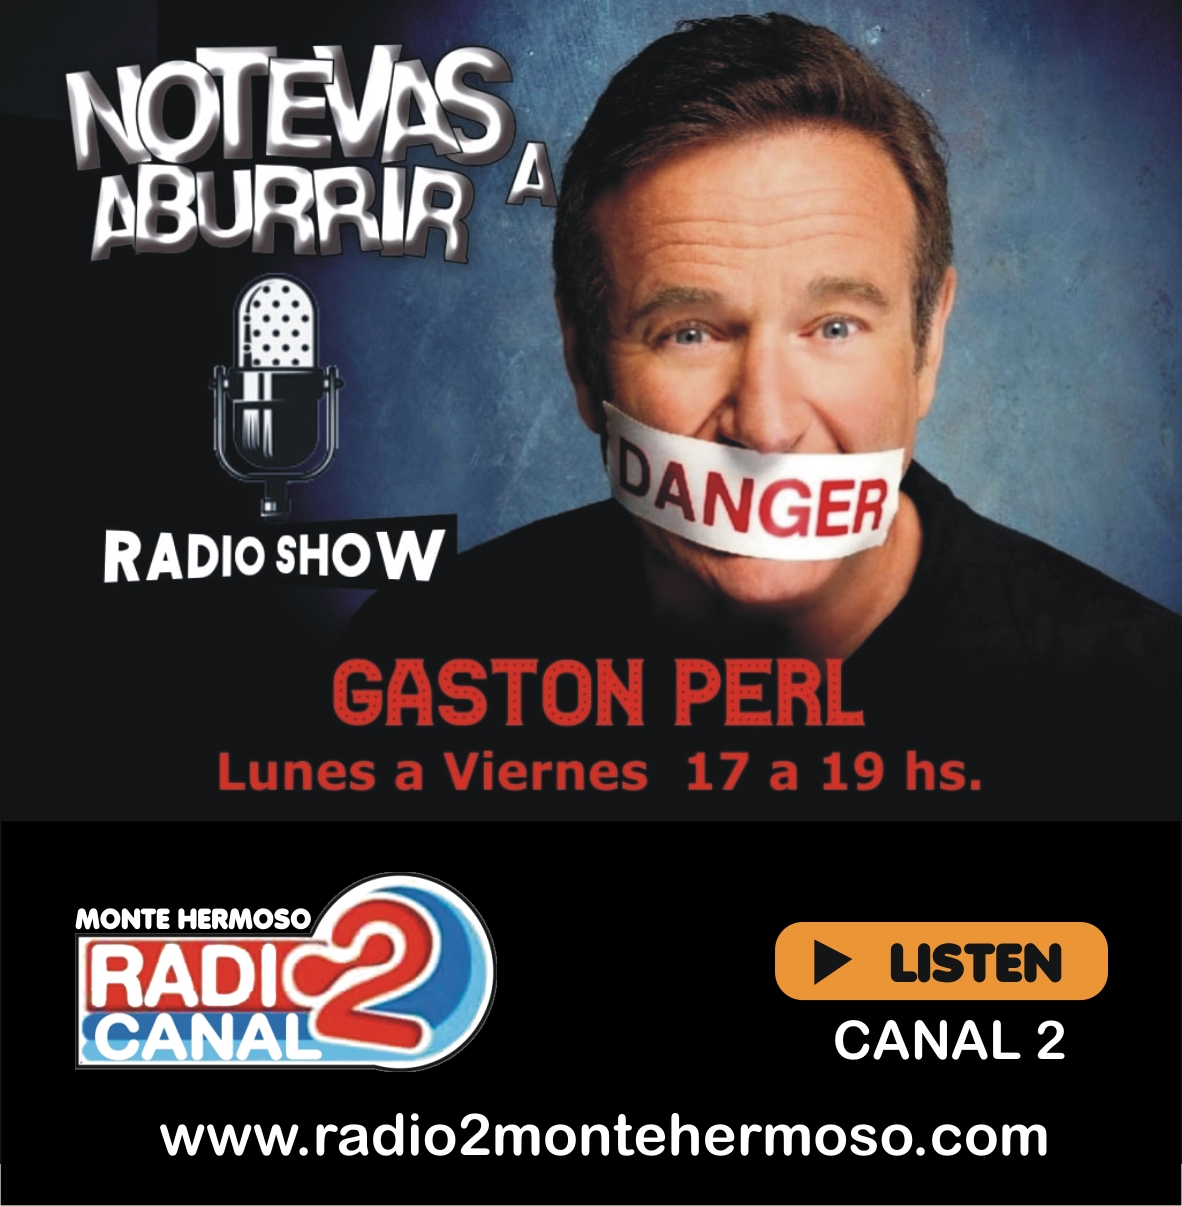 www.radio2montehermoso.com